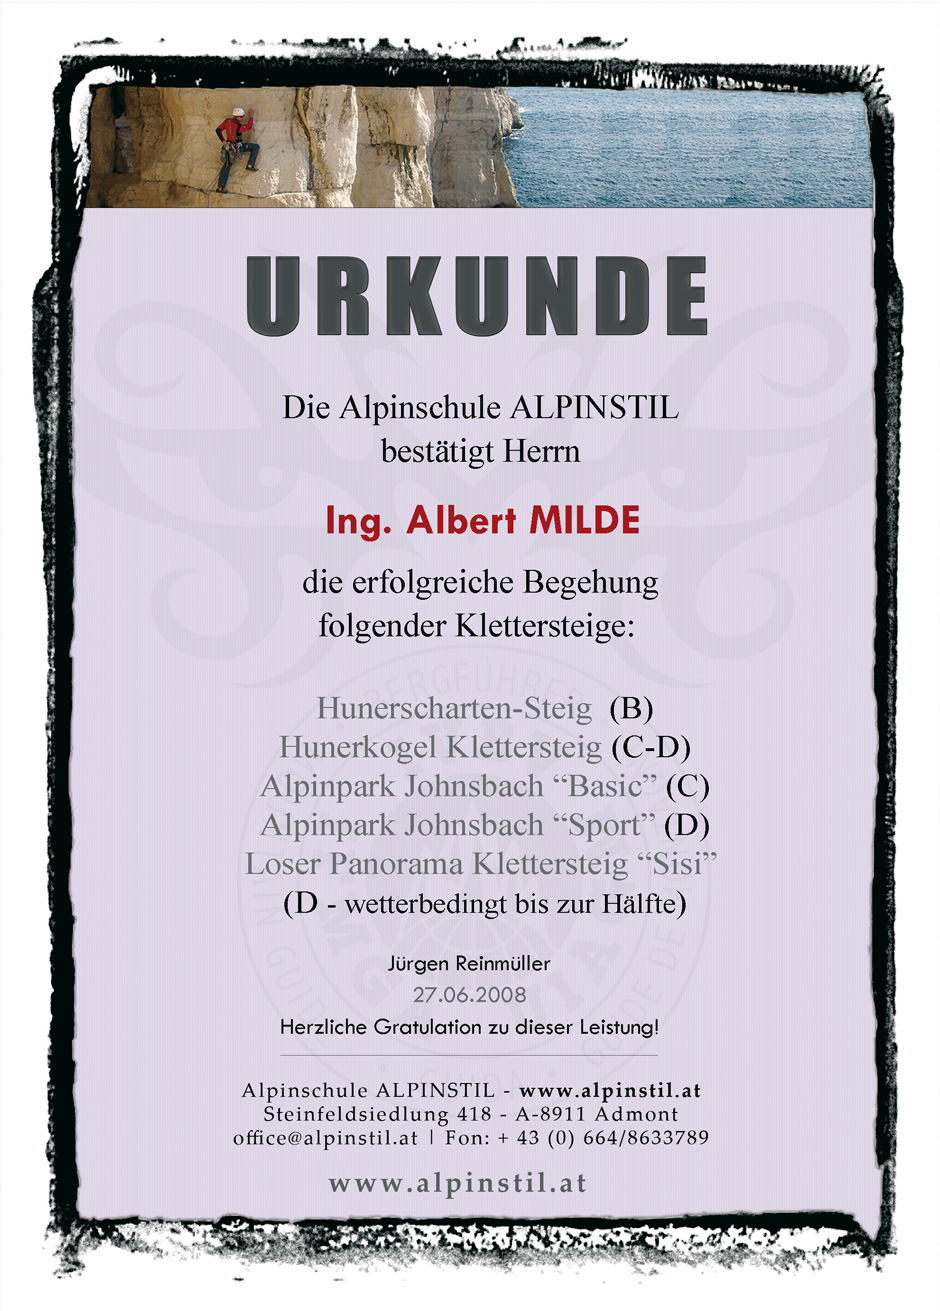 Urkunde Alpinschule Alpinstil